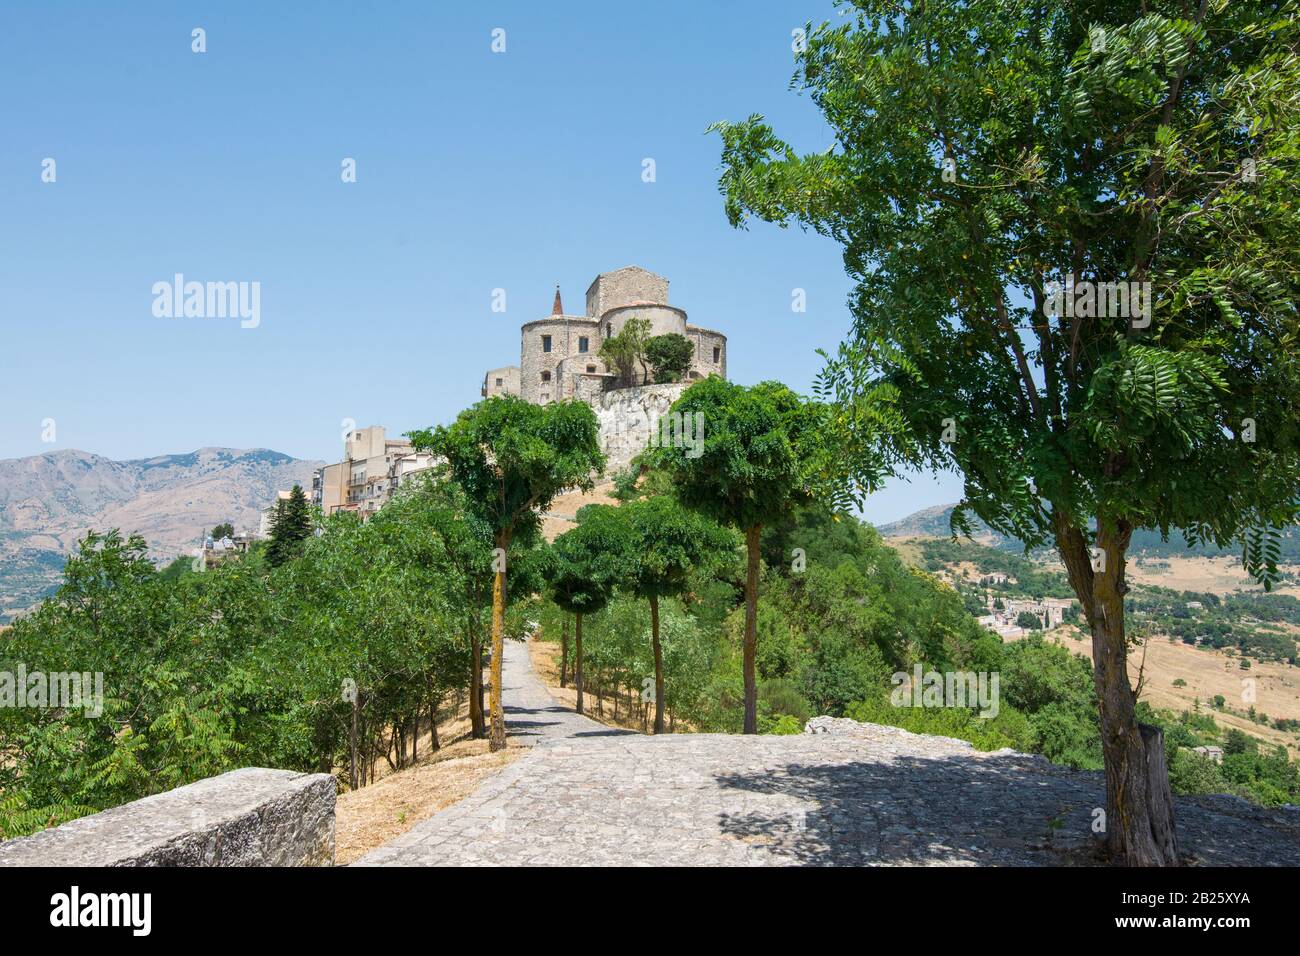 Vista de la iglesia de S. Maria di Loreto en PETRALIA SOPRANA, Palermo, Sicilia, Italia. Petralia Soprana en las montañas Madonie, elegido mejor village Foto de stock